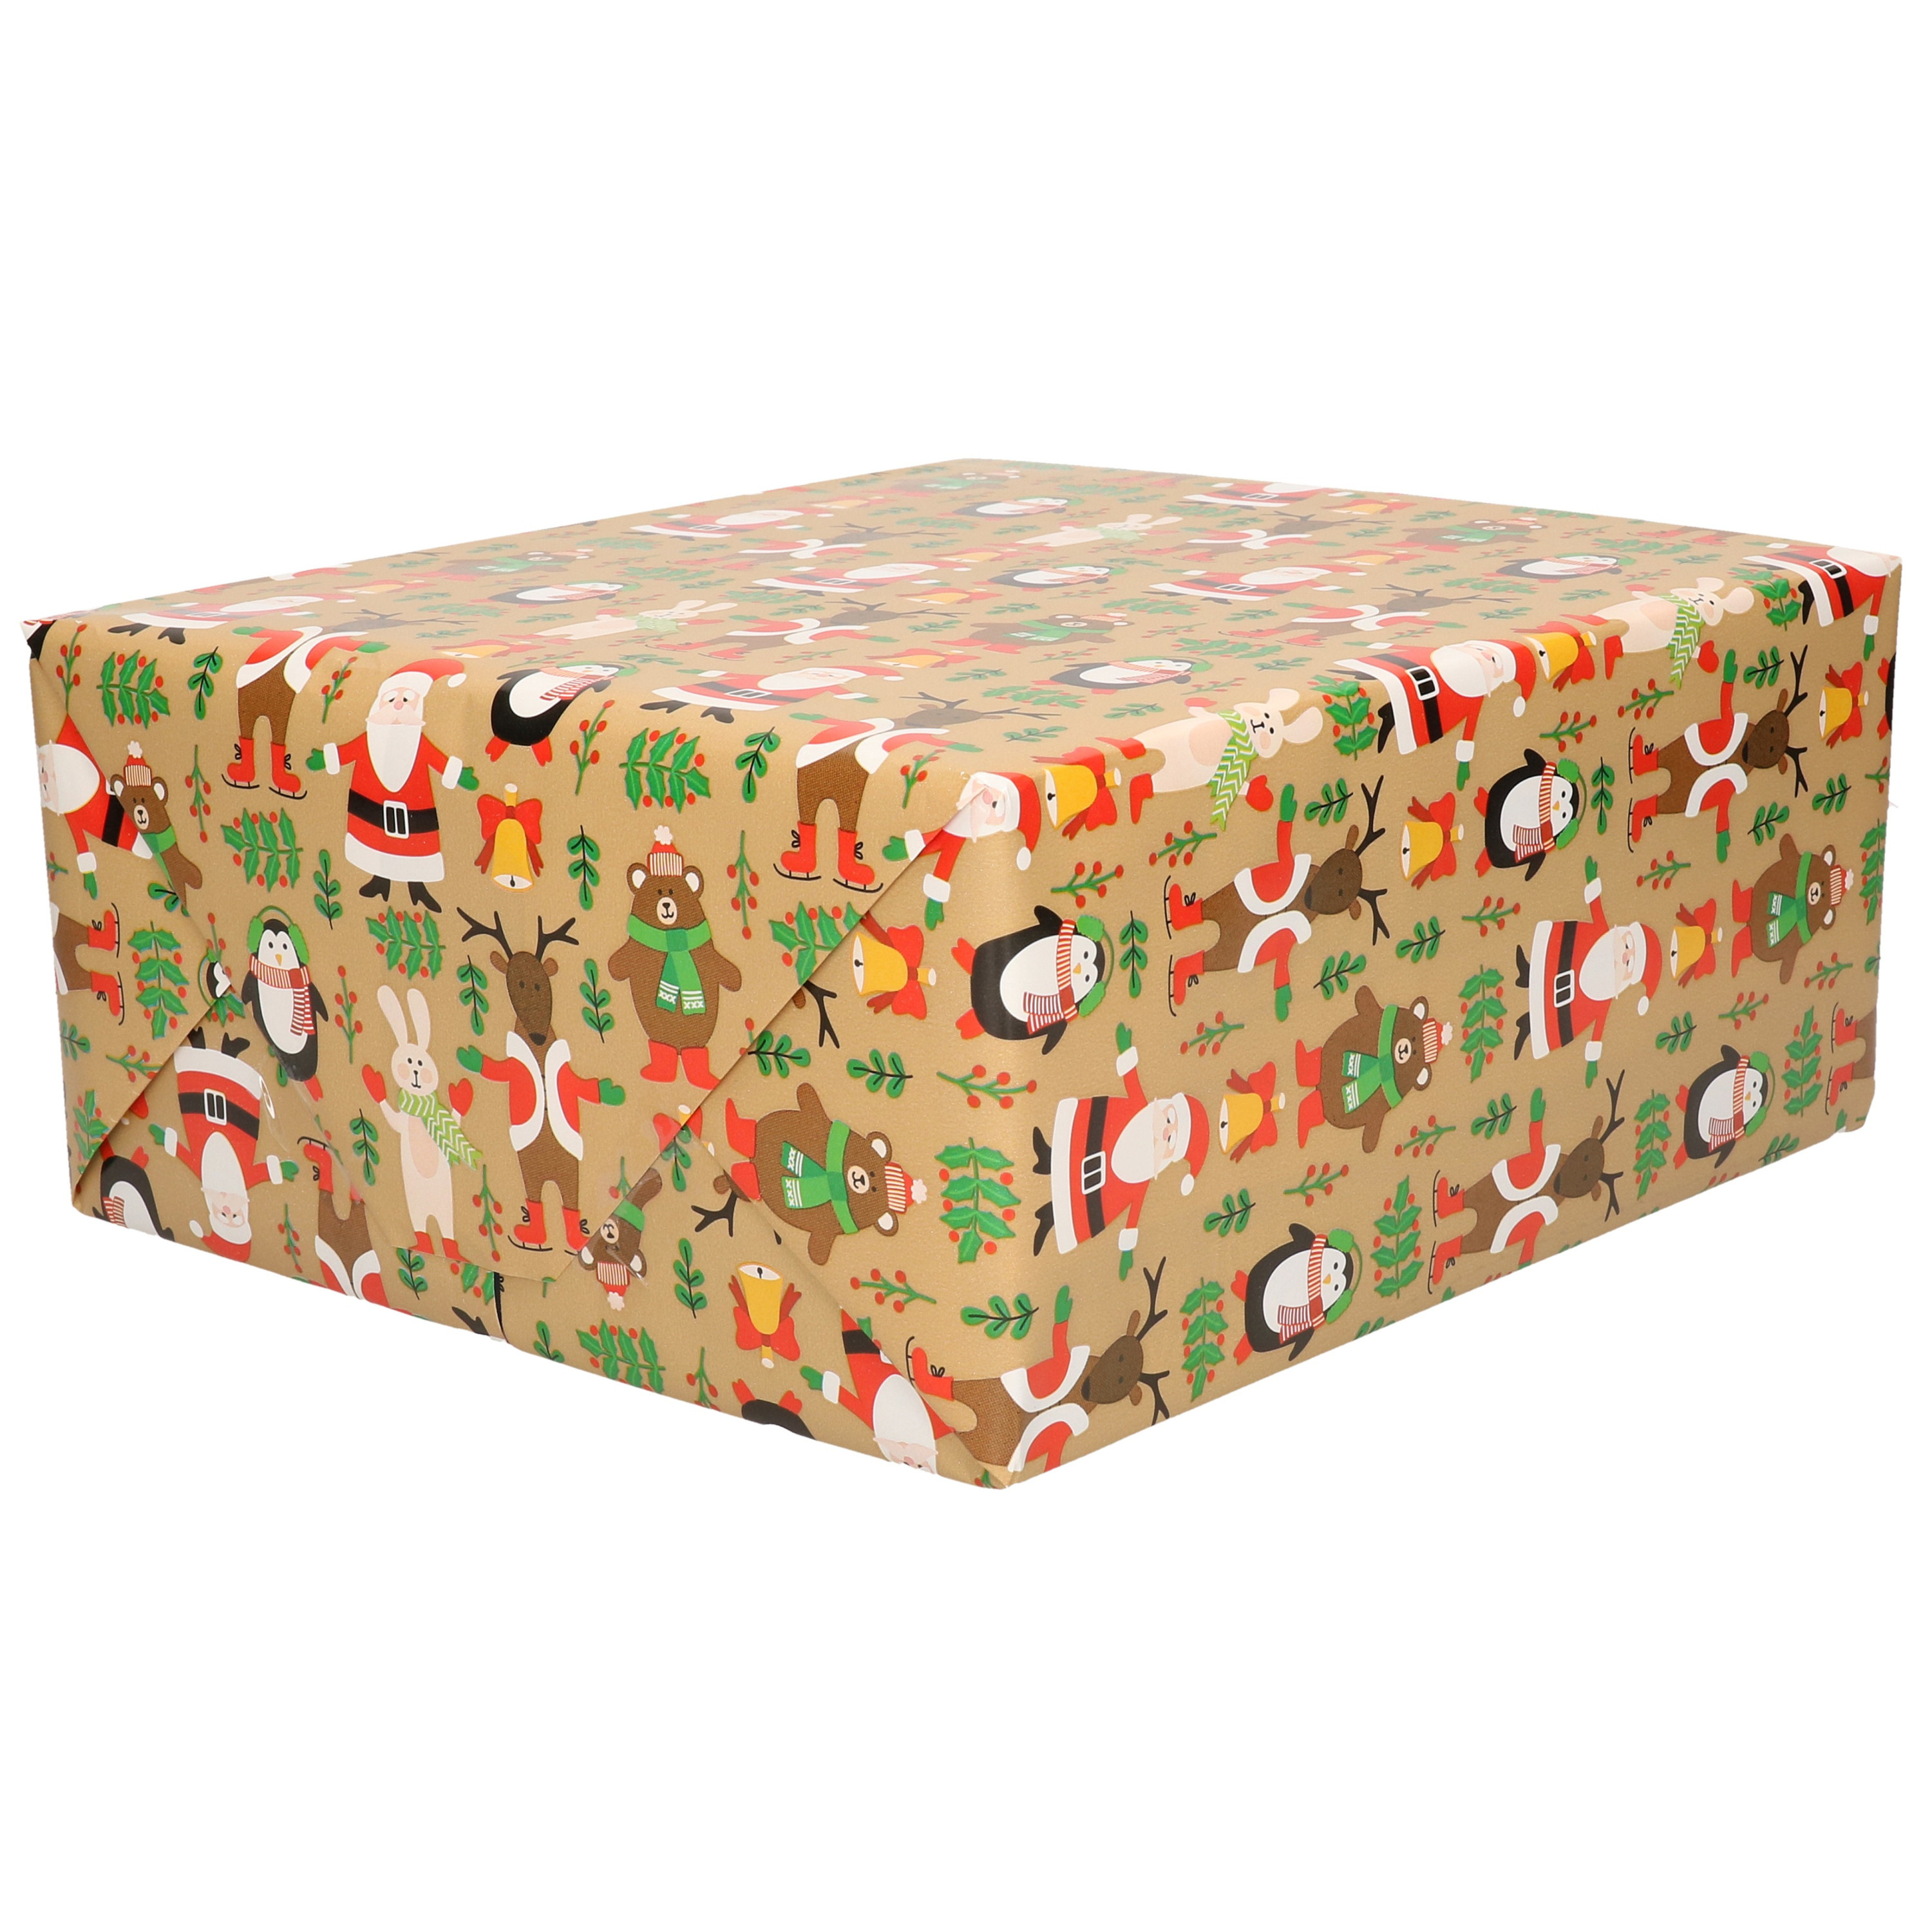 2x Rollen Kerst inpakpapier/cadeaupapier bruin 2,5 x 0,7 meter